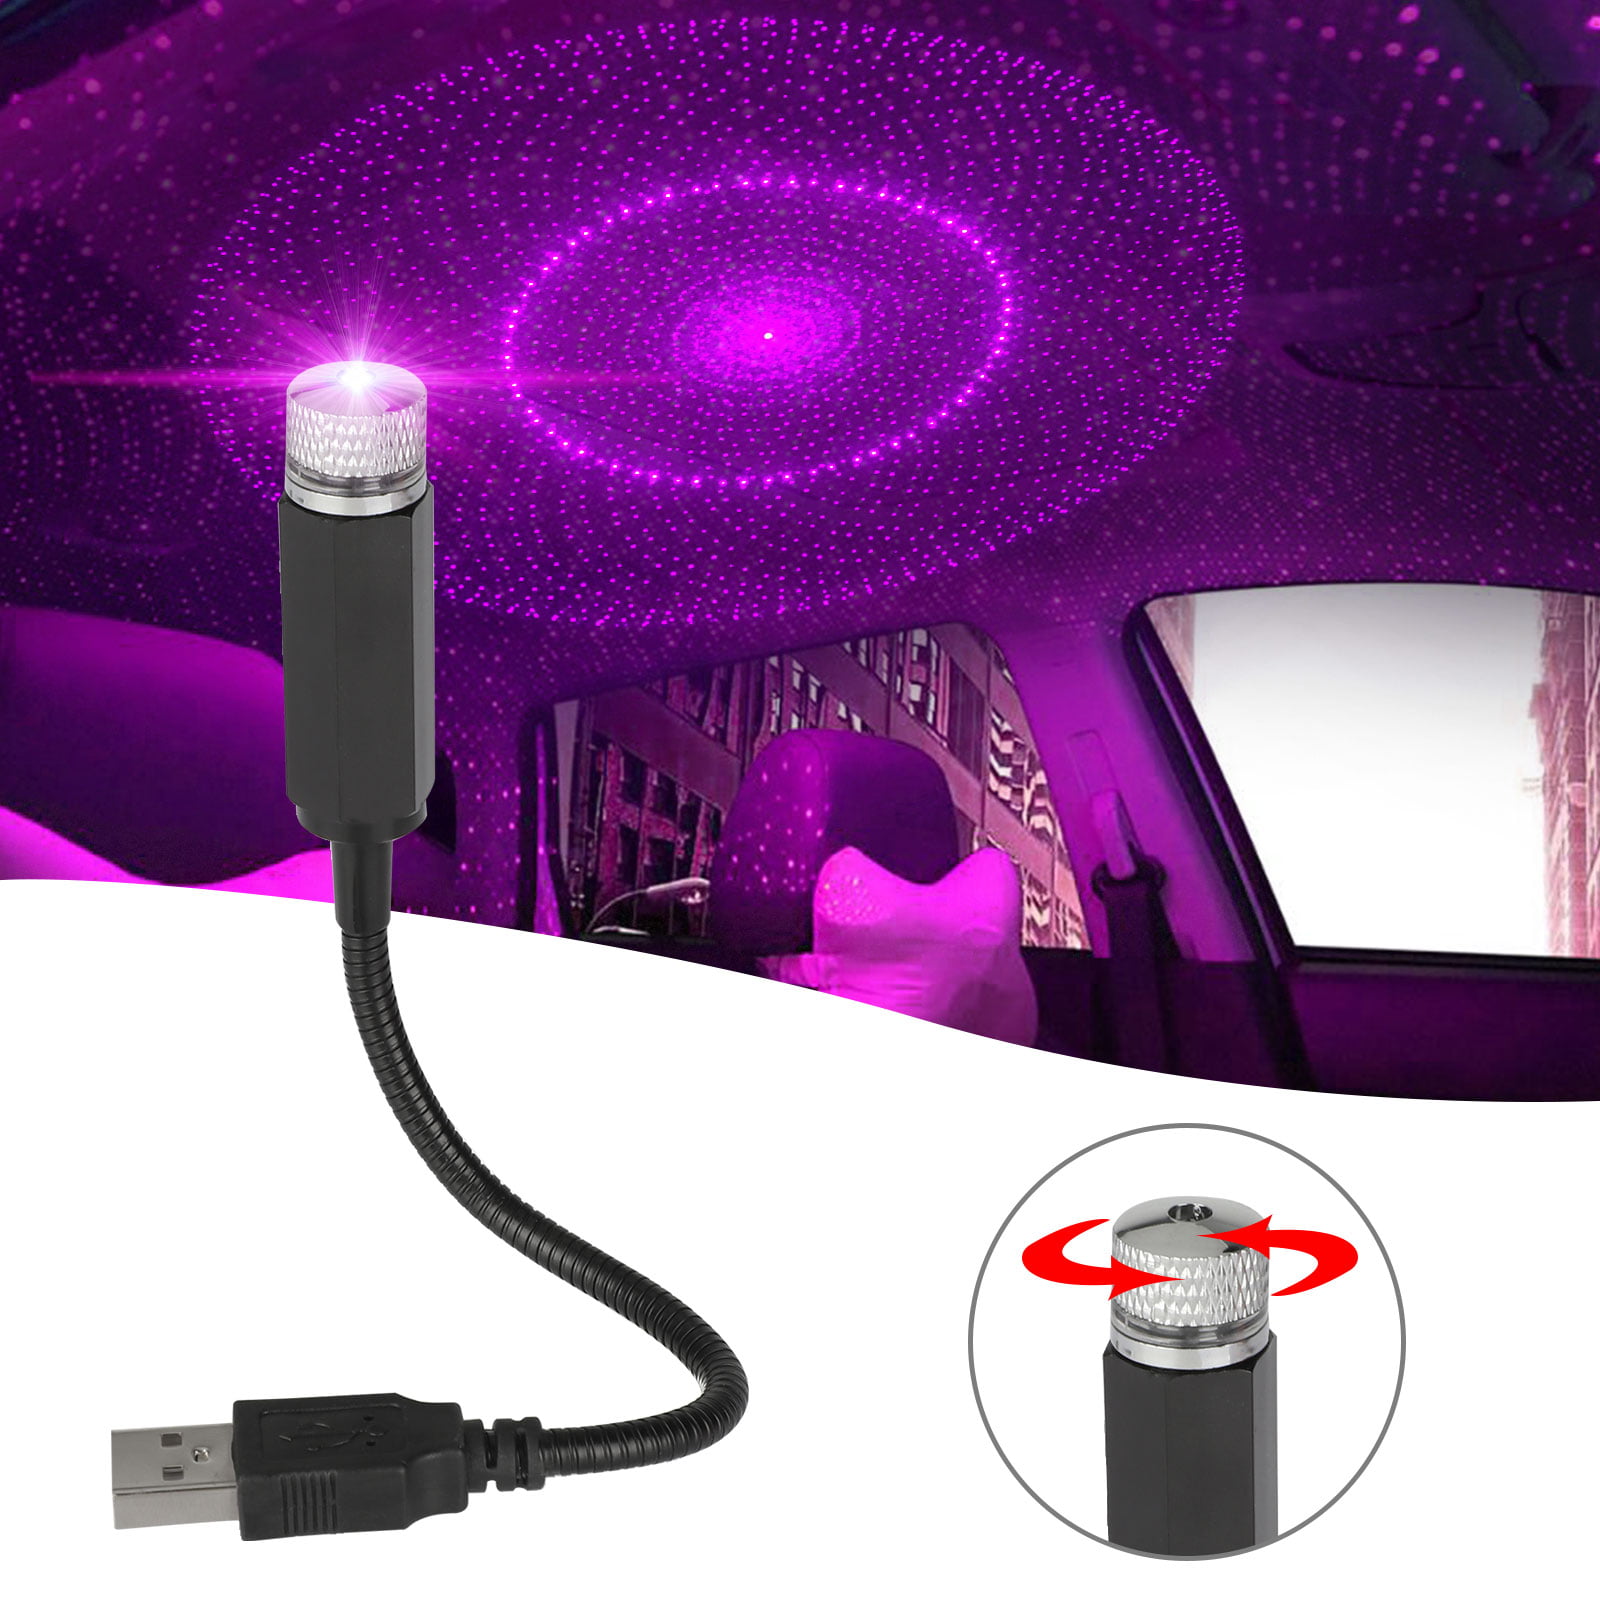 Universal USB Star Projector Night Light, EEEkit Car Auto Roof Lights